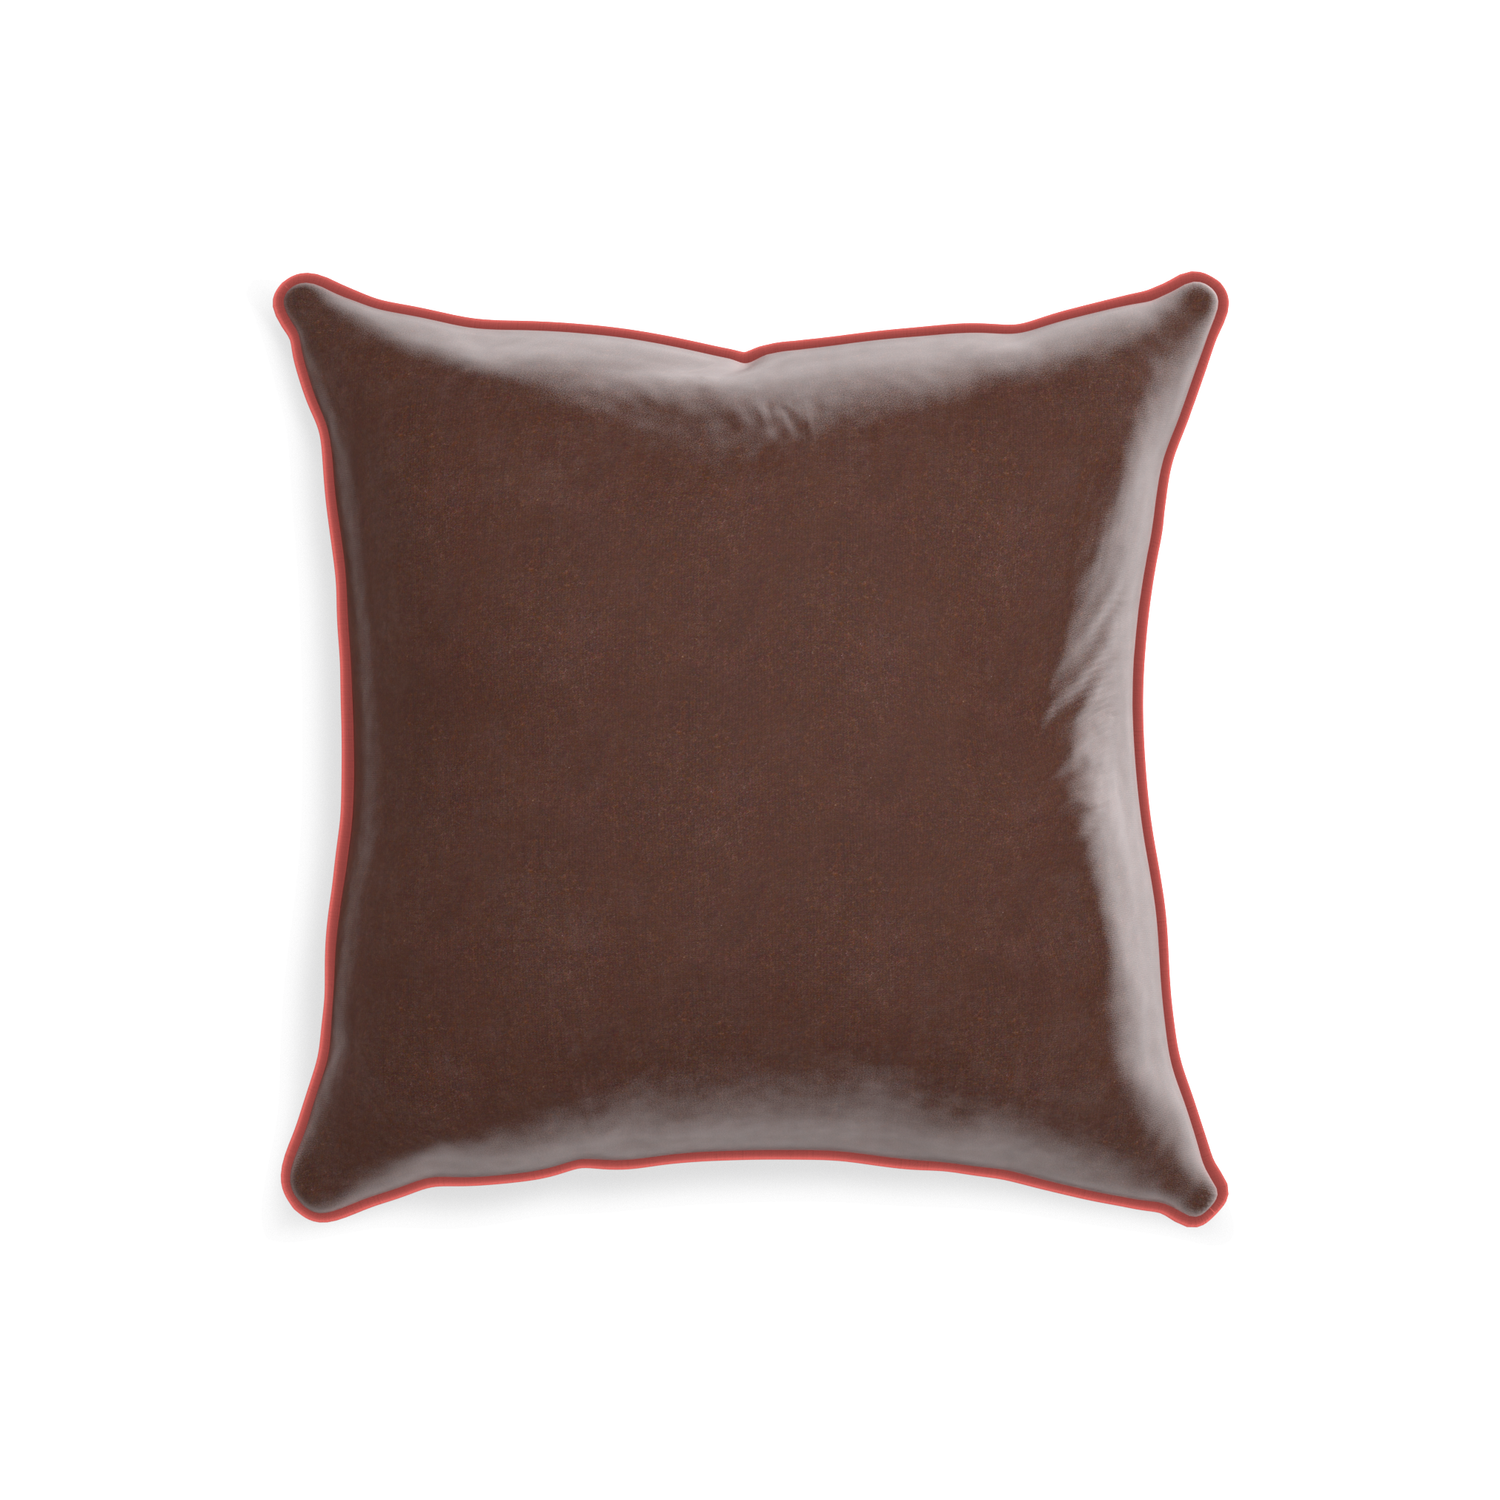 20-square walnut velvet custom pillow with c piping on white background